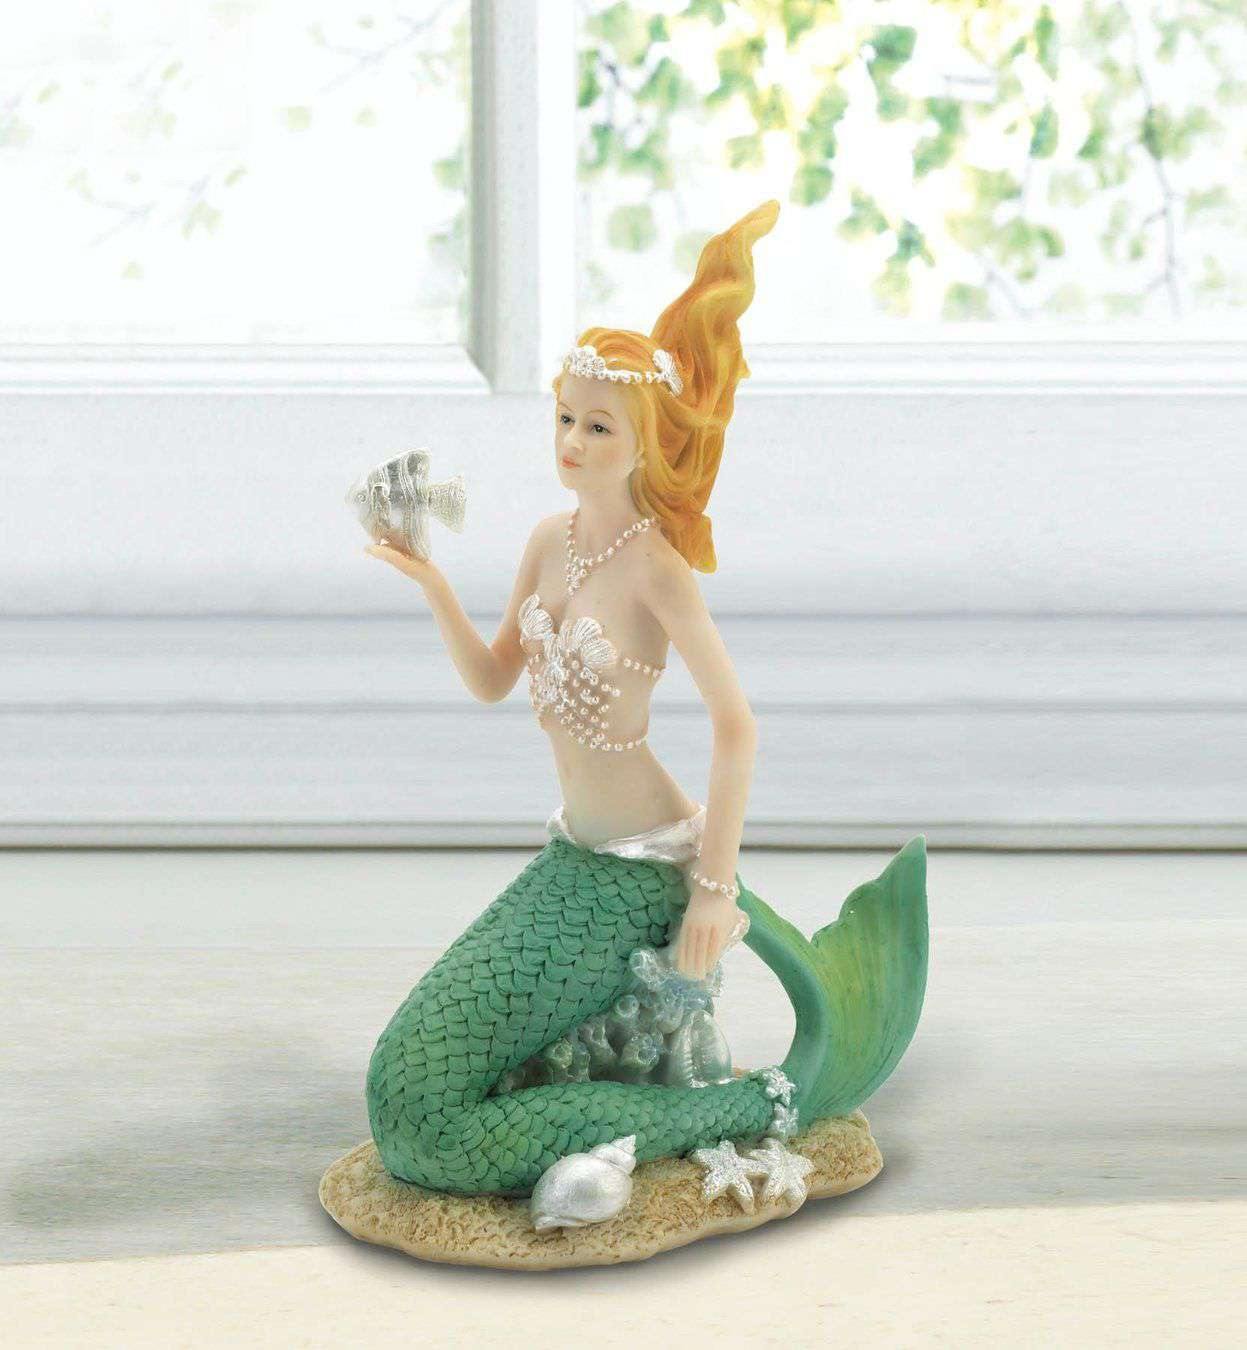 Mermaid Holding Fish Figurine - The Fox Decor